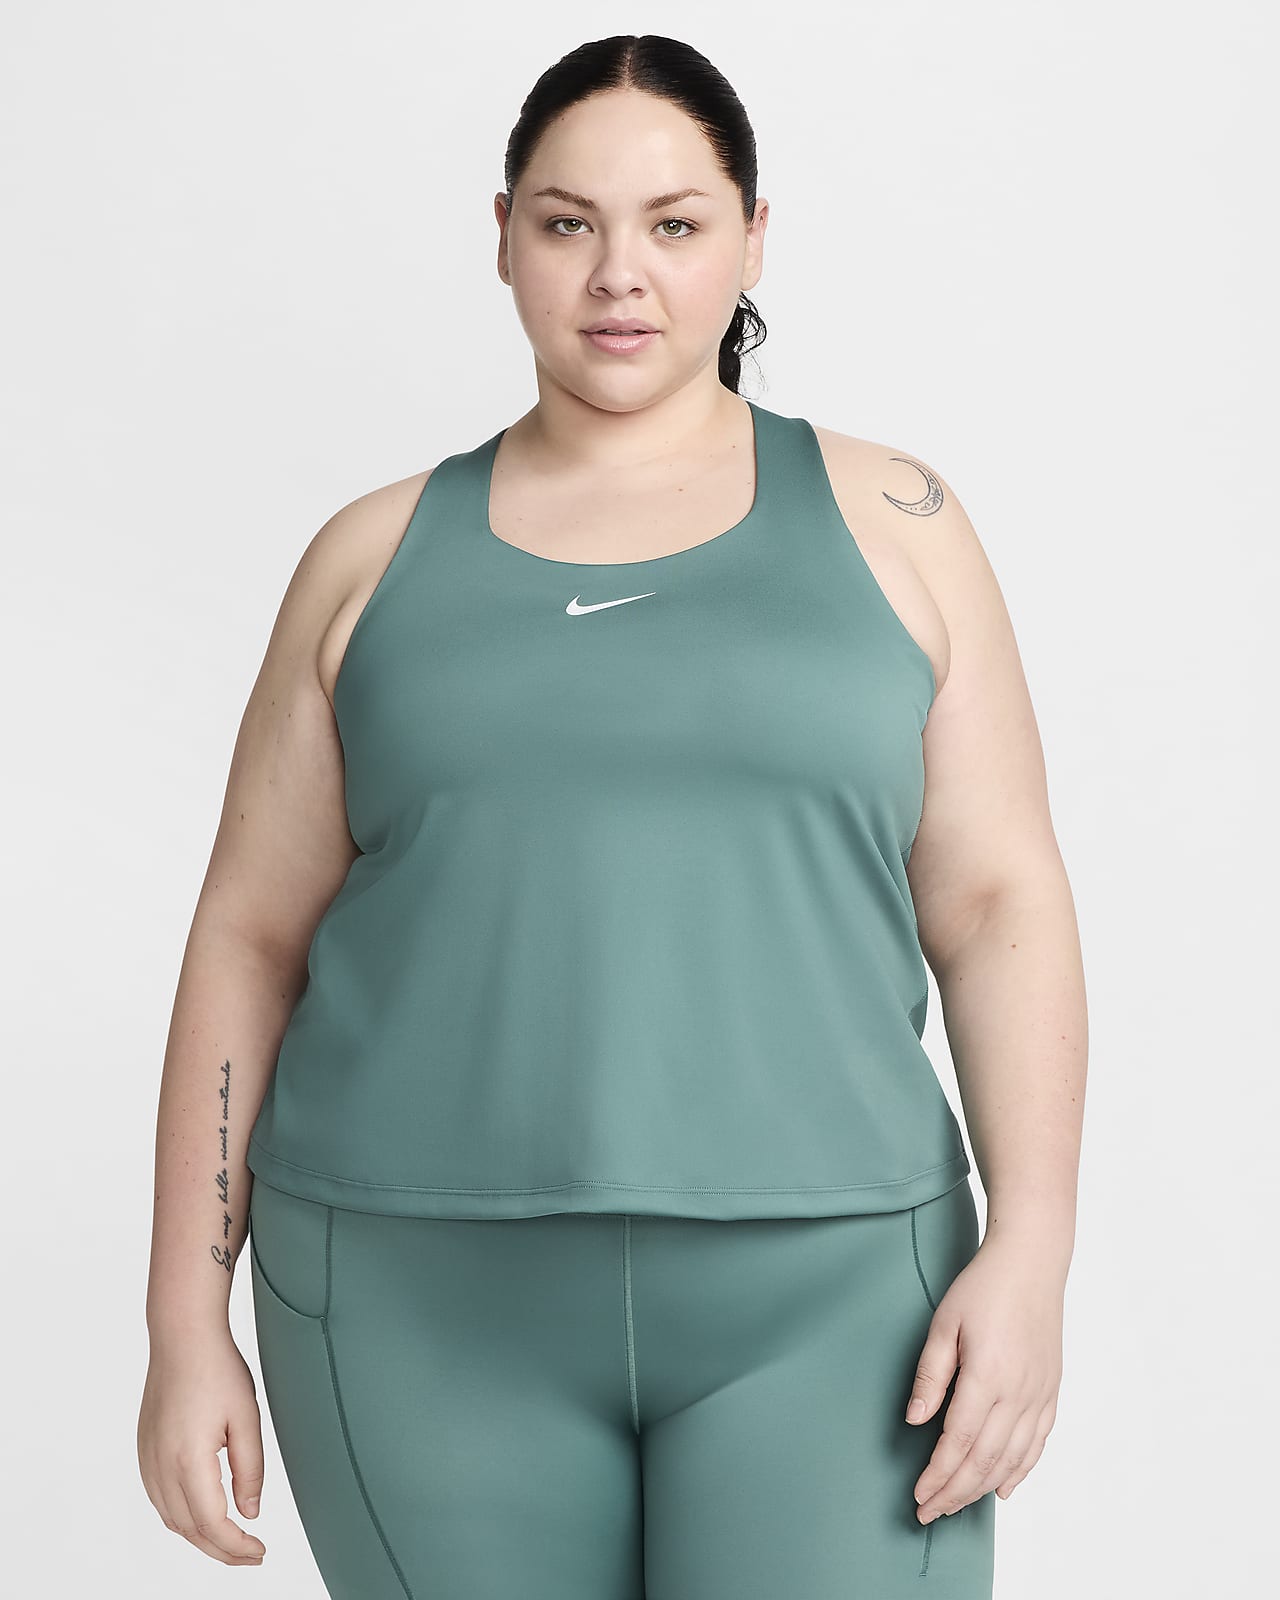 Size XS) Alo Yoga Sports Tank with bra, Women's Fashion